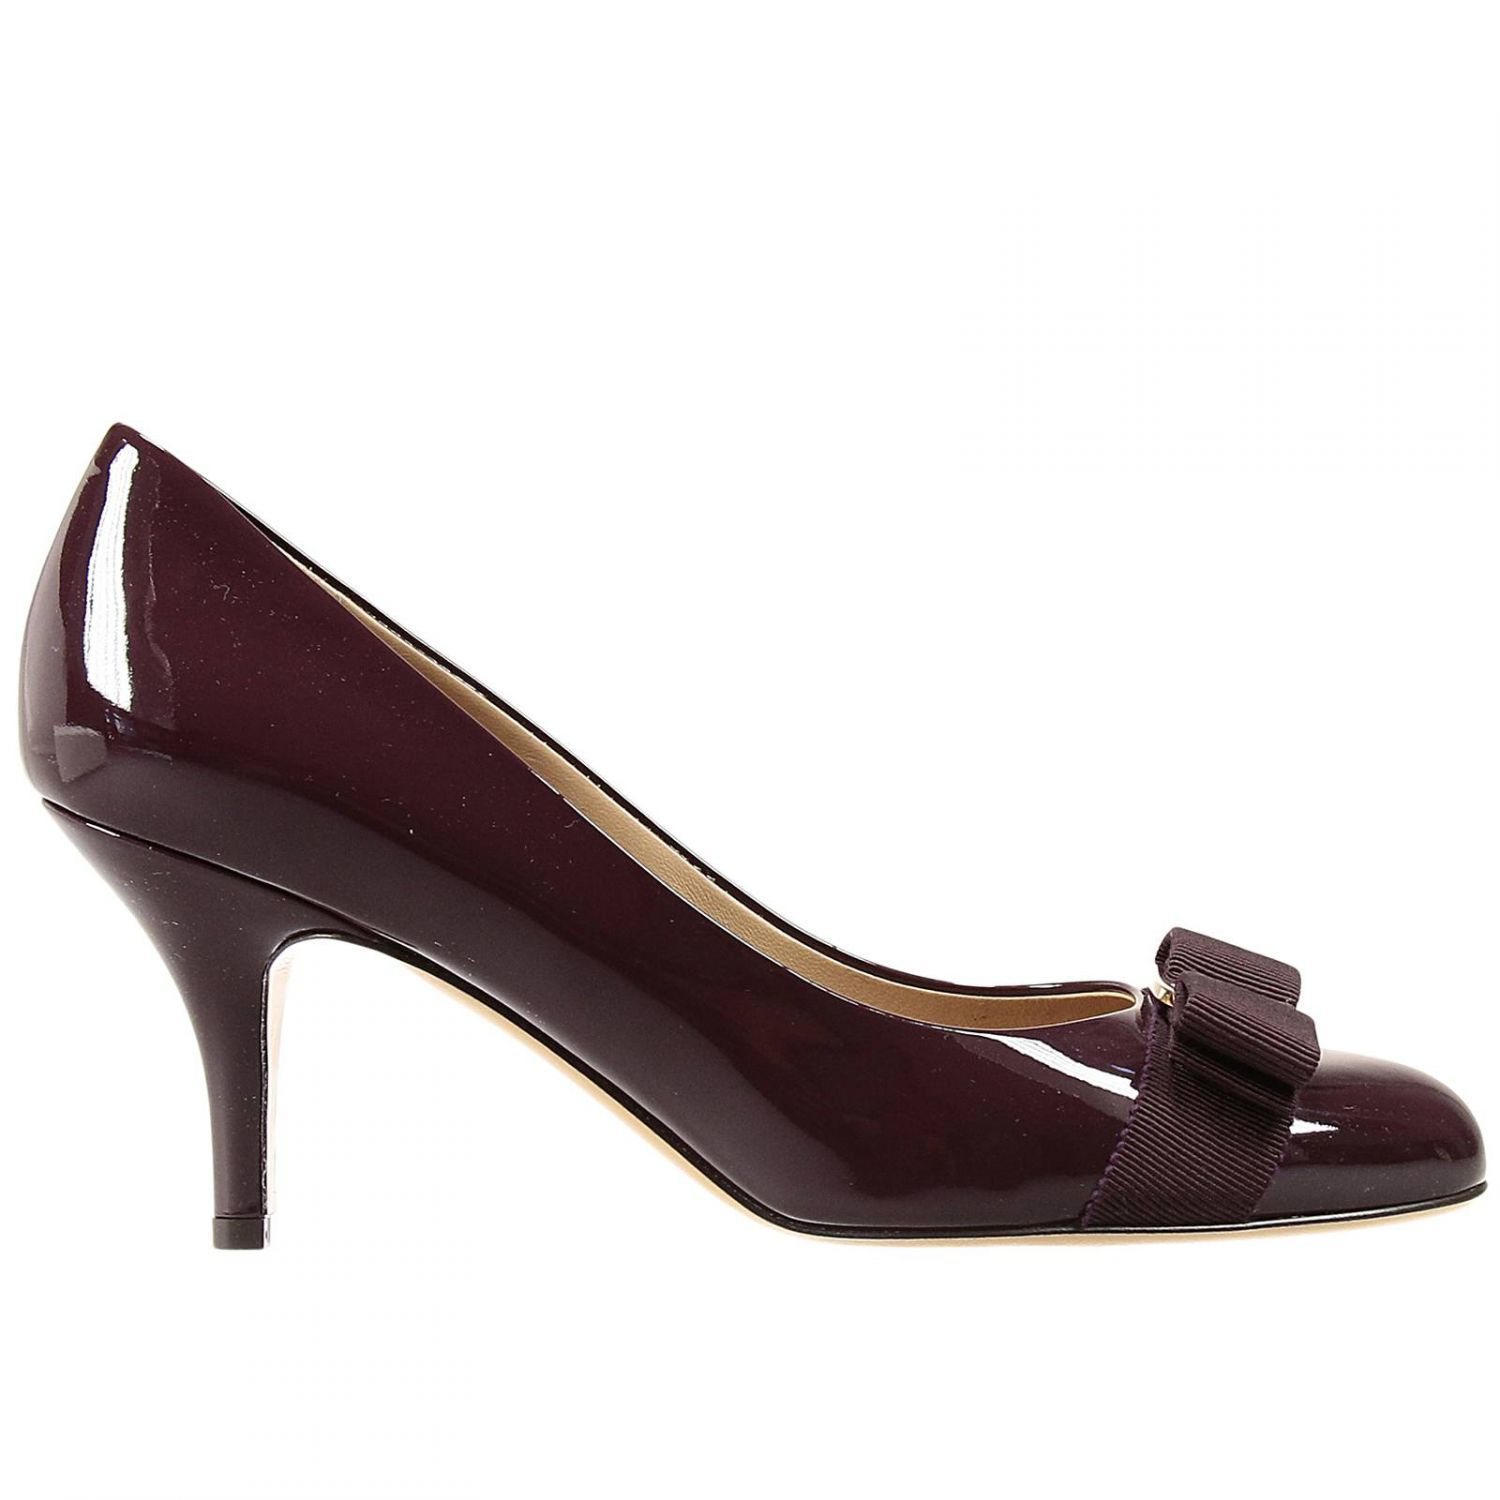 ferragamo burgundy shoes